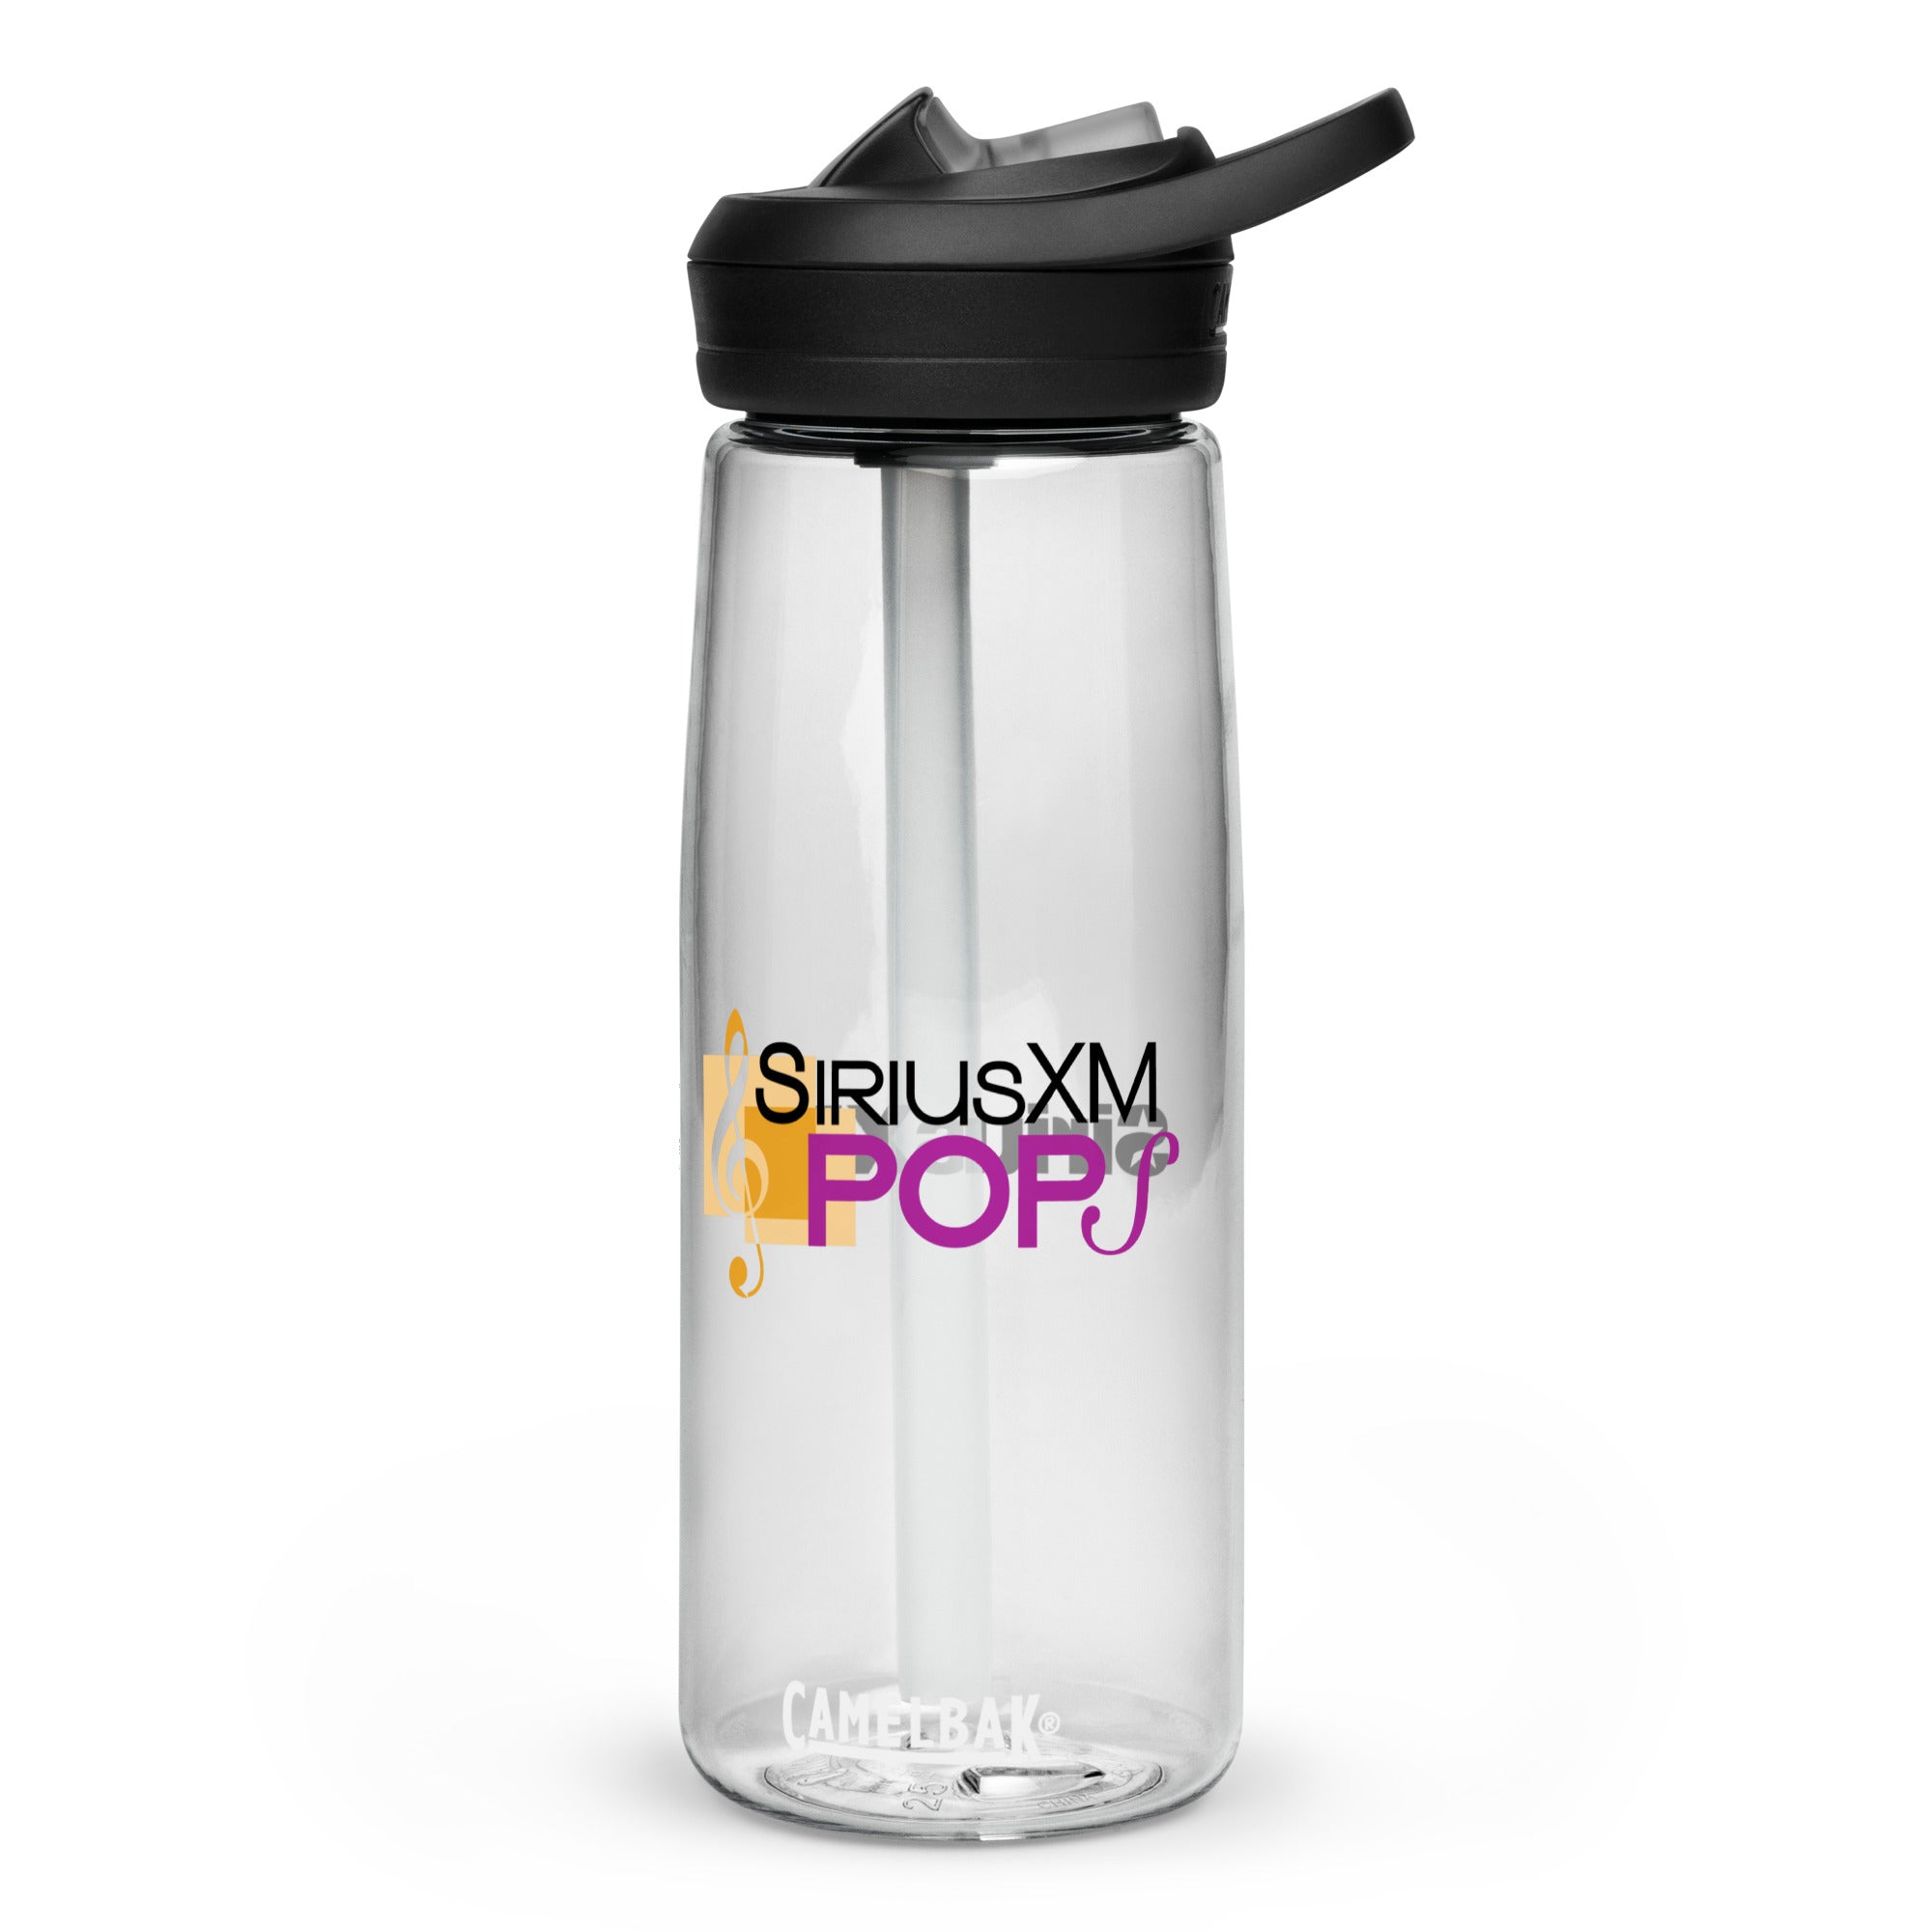 SiriusXM Pops: CamelBak Eddy®+ Sports Bottle